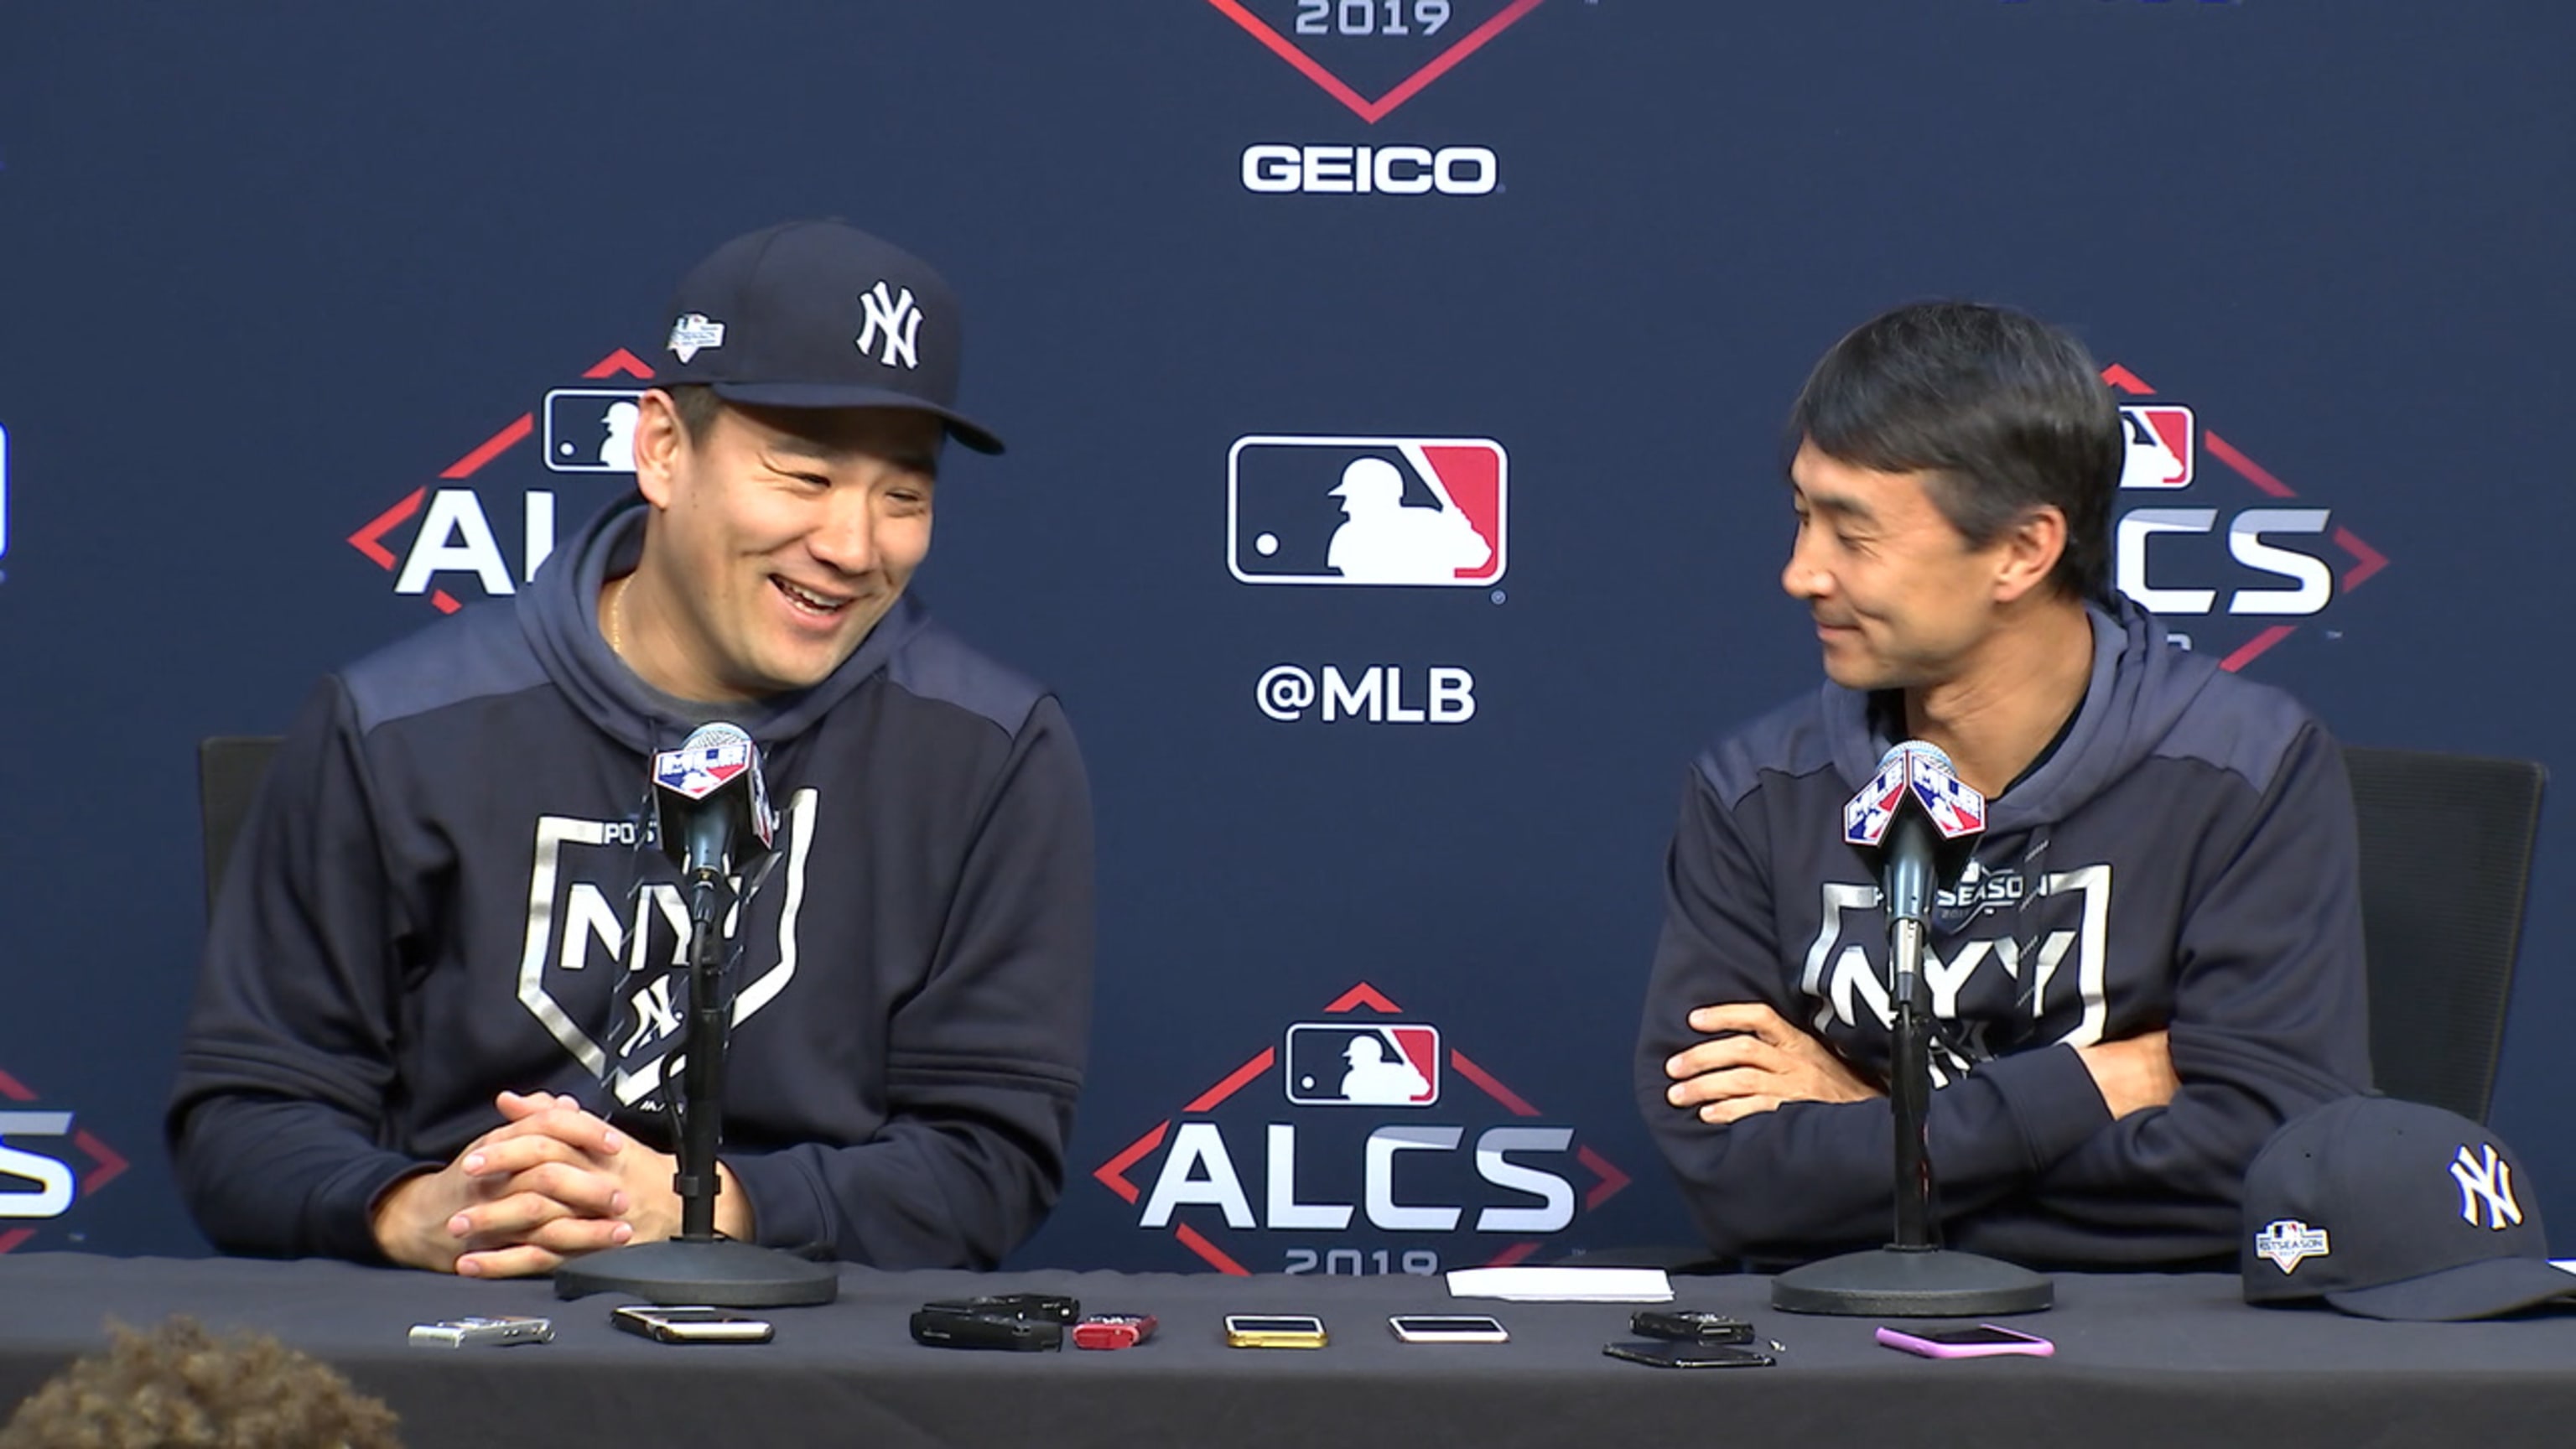 Masahiro Tanaka became the postseason hero for the Yankees in 2019